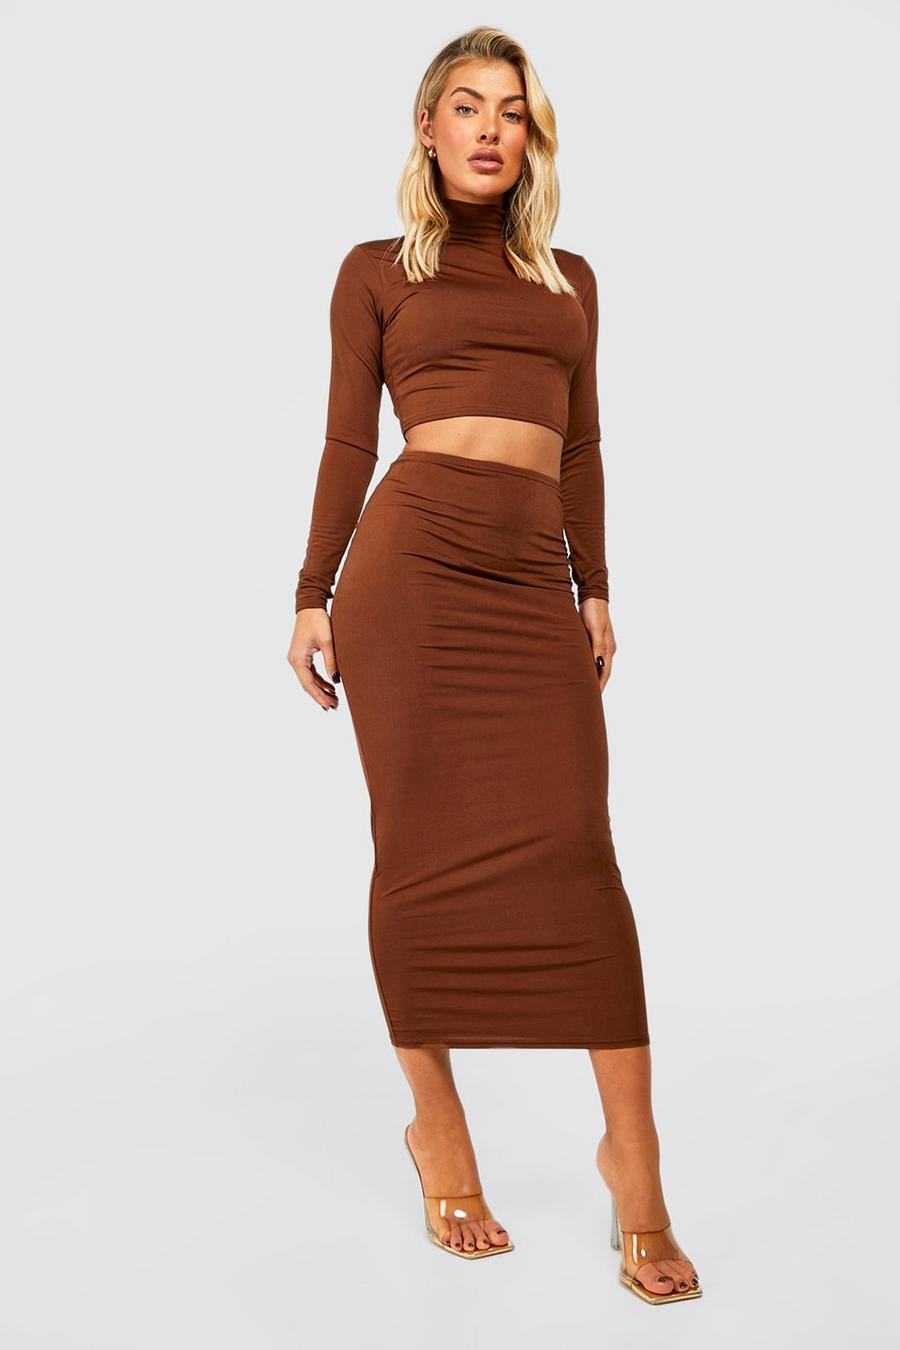 Chocolate brown Textured Slinky Midaxi Skirt